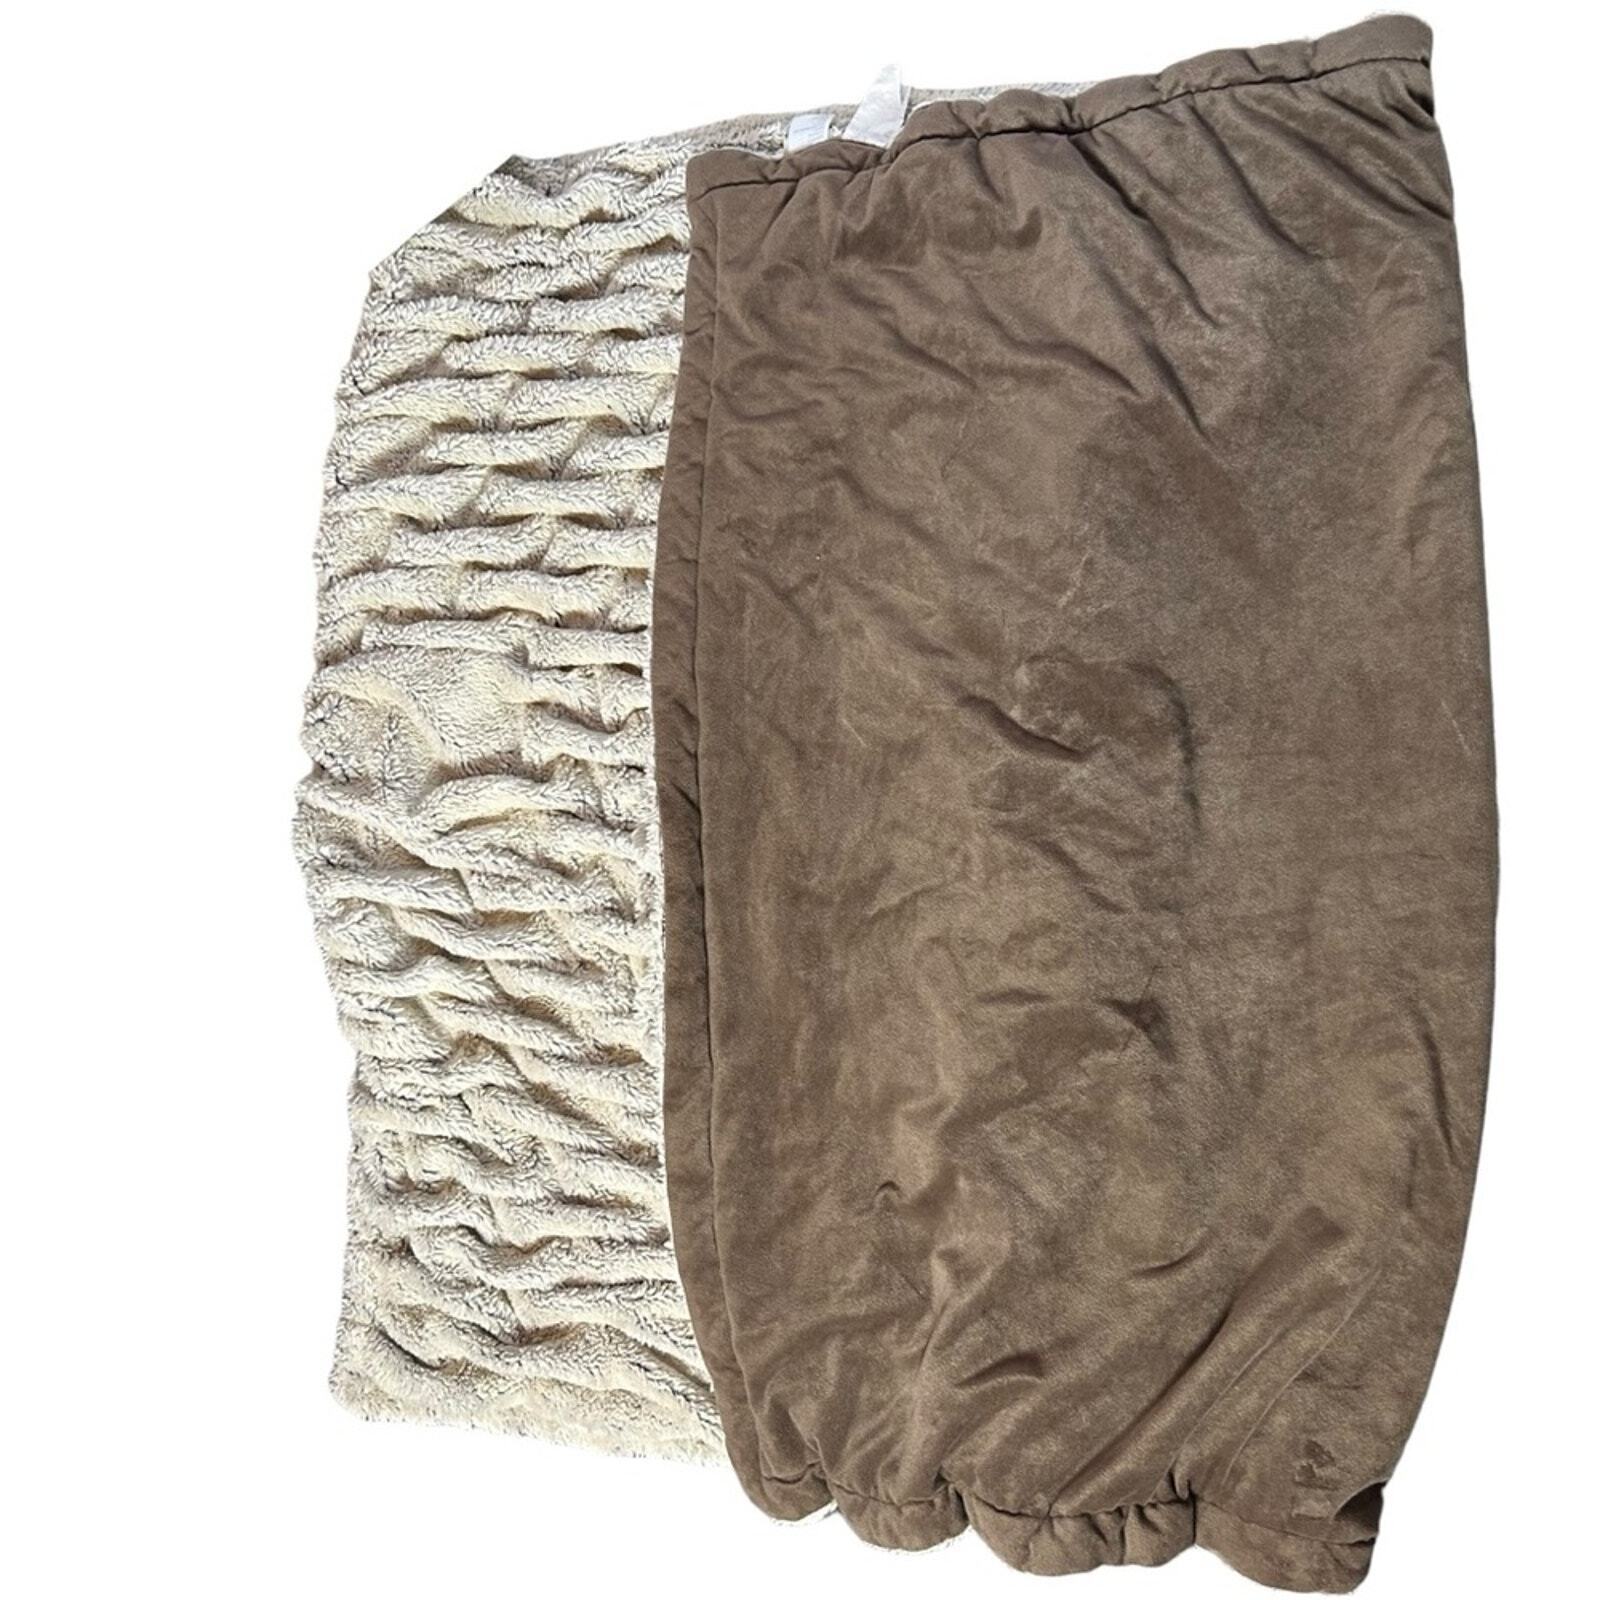 Soft Surroundings La Parisienne Faux Fur Throw Blanket 50x70 Brown & Cream